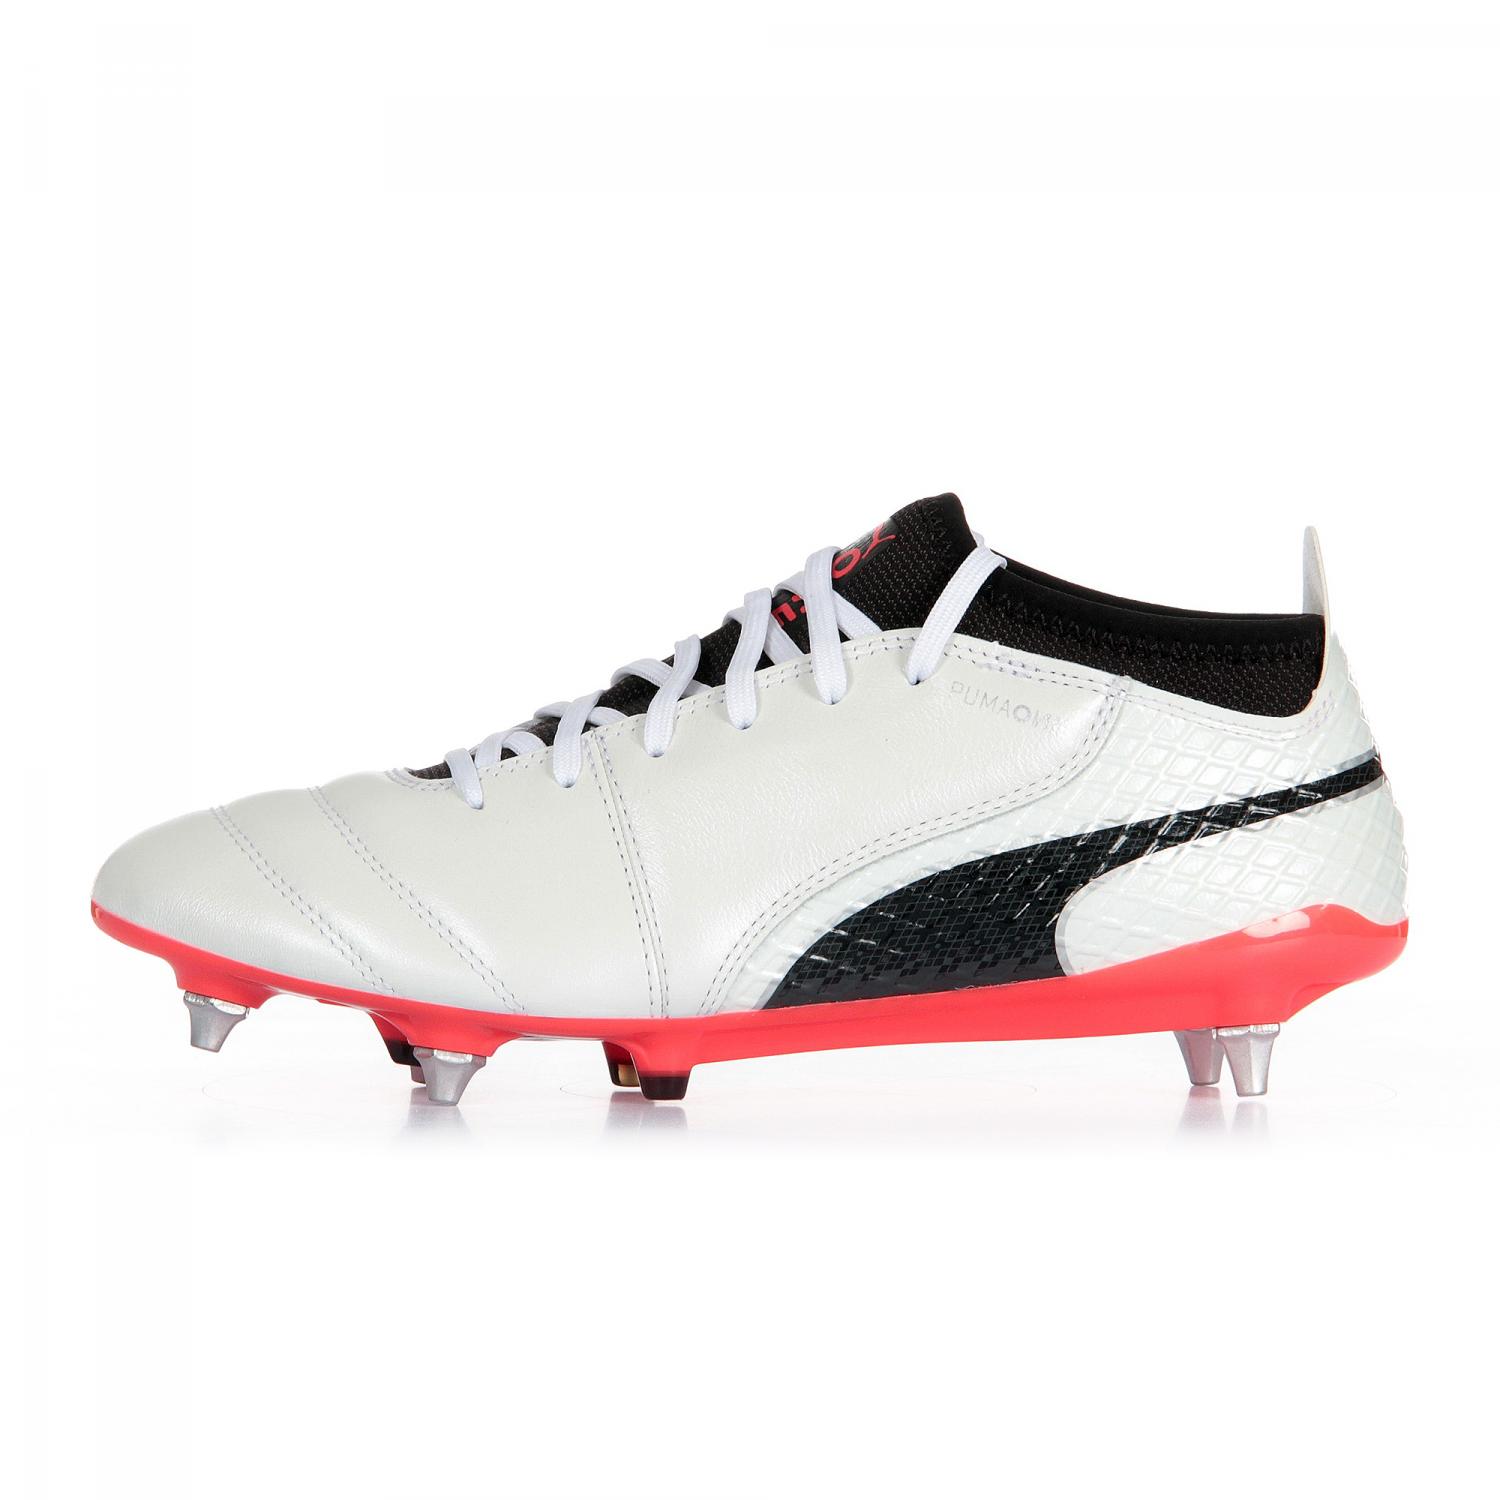 Puma Football Shoes One 17.2 Mx Sg